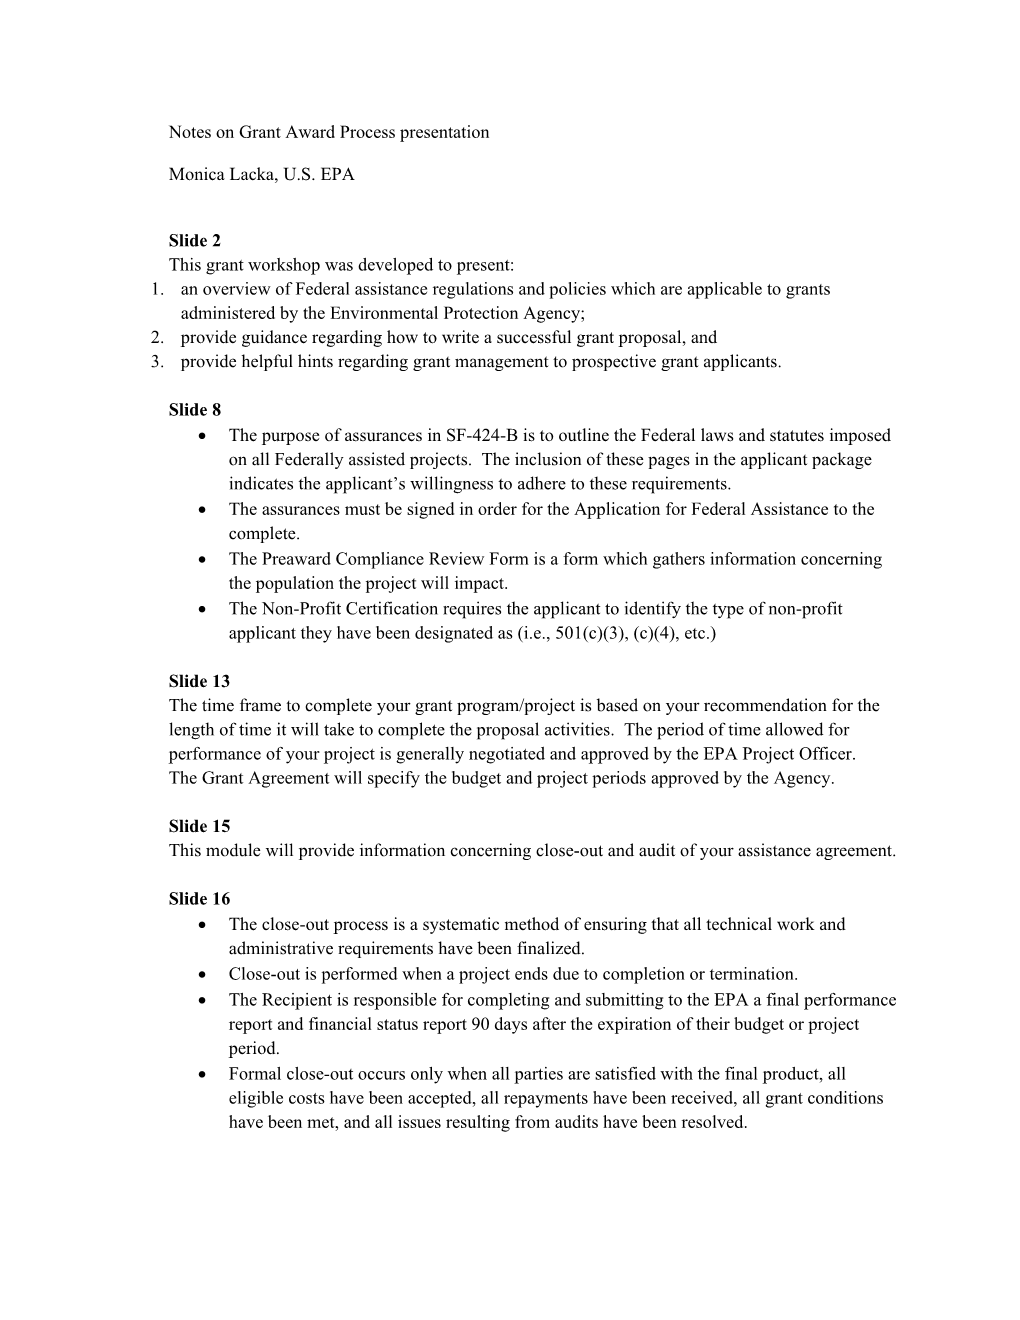 Notes on Grant Award Process Presentation